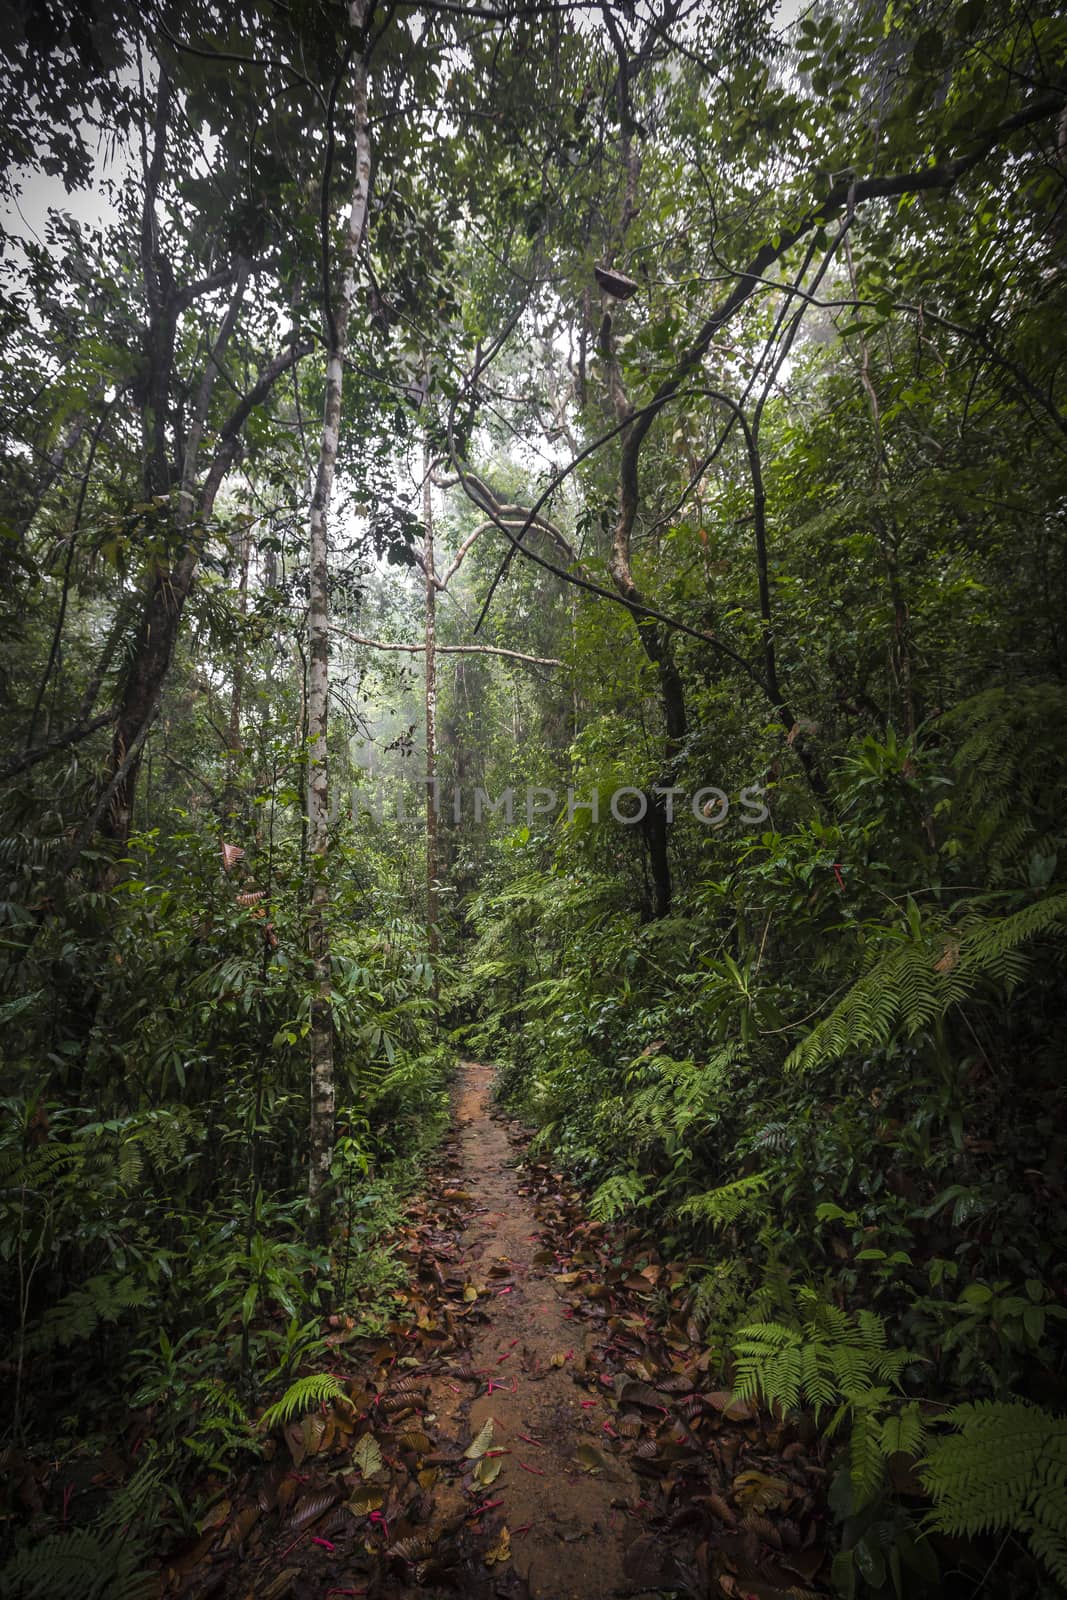 Path in the jungle. Sinharaja rainforest in Sri Lanka.

